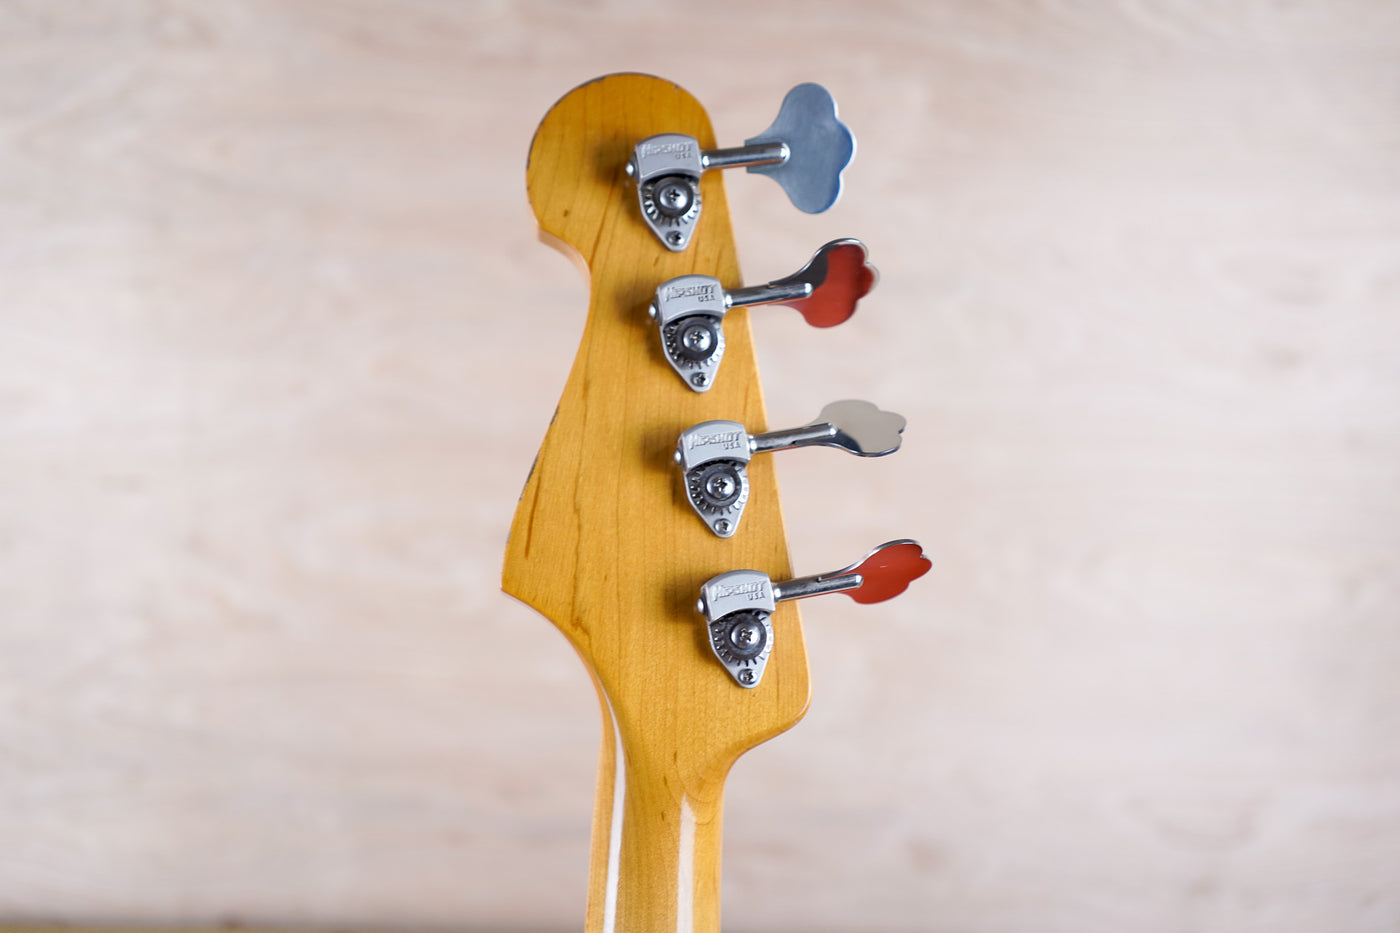 Starr Custom Style P-Style Bass Relic Sunburst w/ Vintage Fender Hard Case